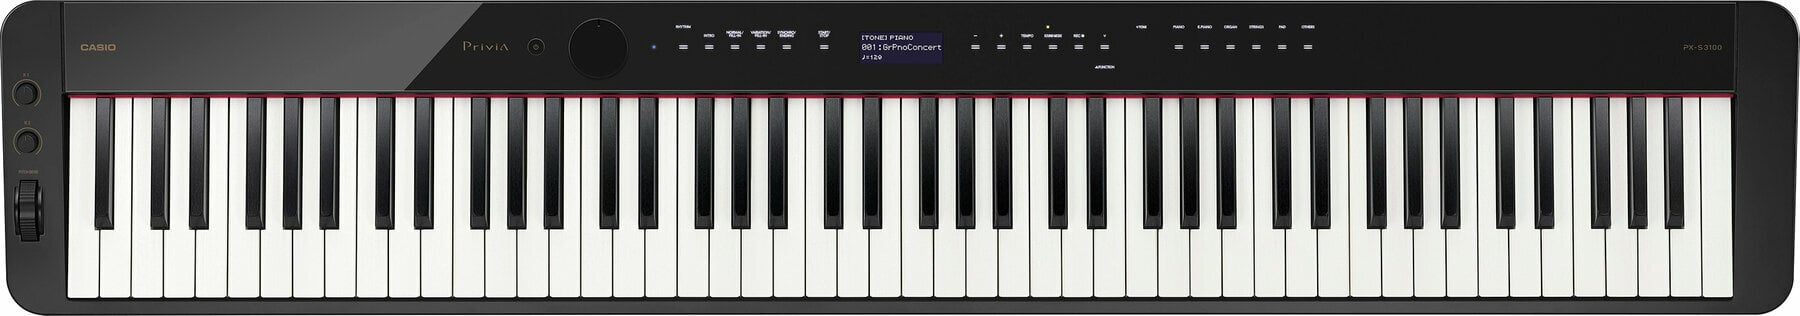 Piano de scène Casio PX-S3100 BK Privia Piano de scène